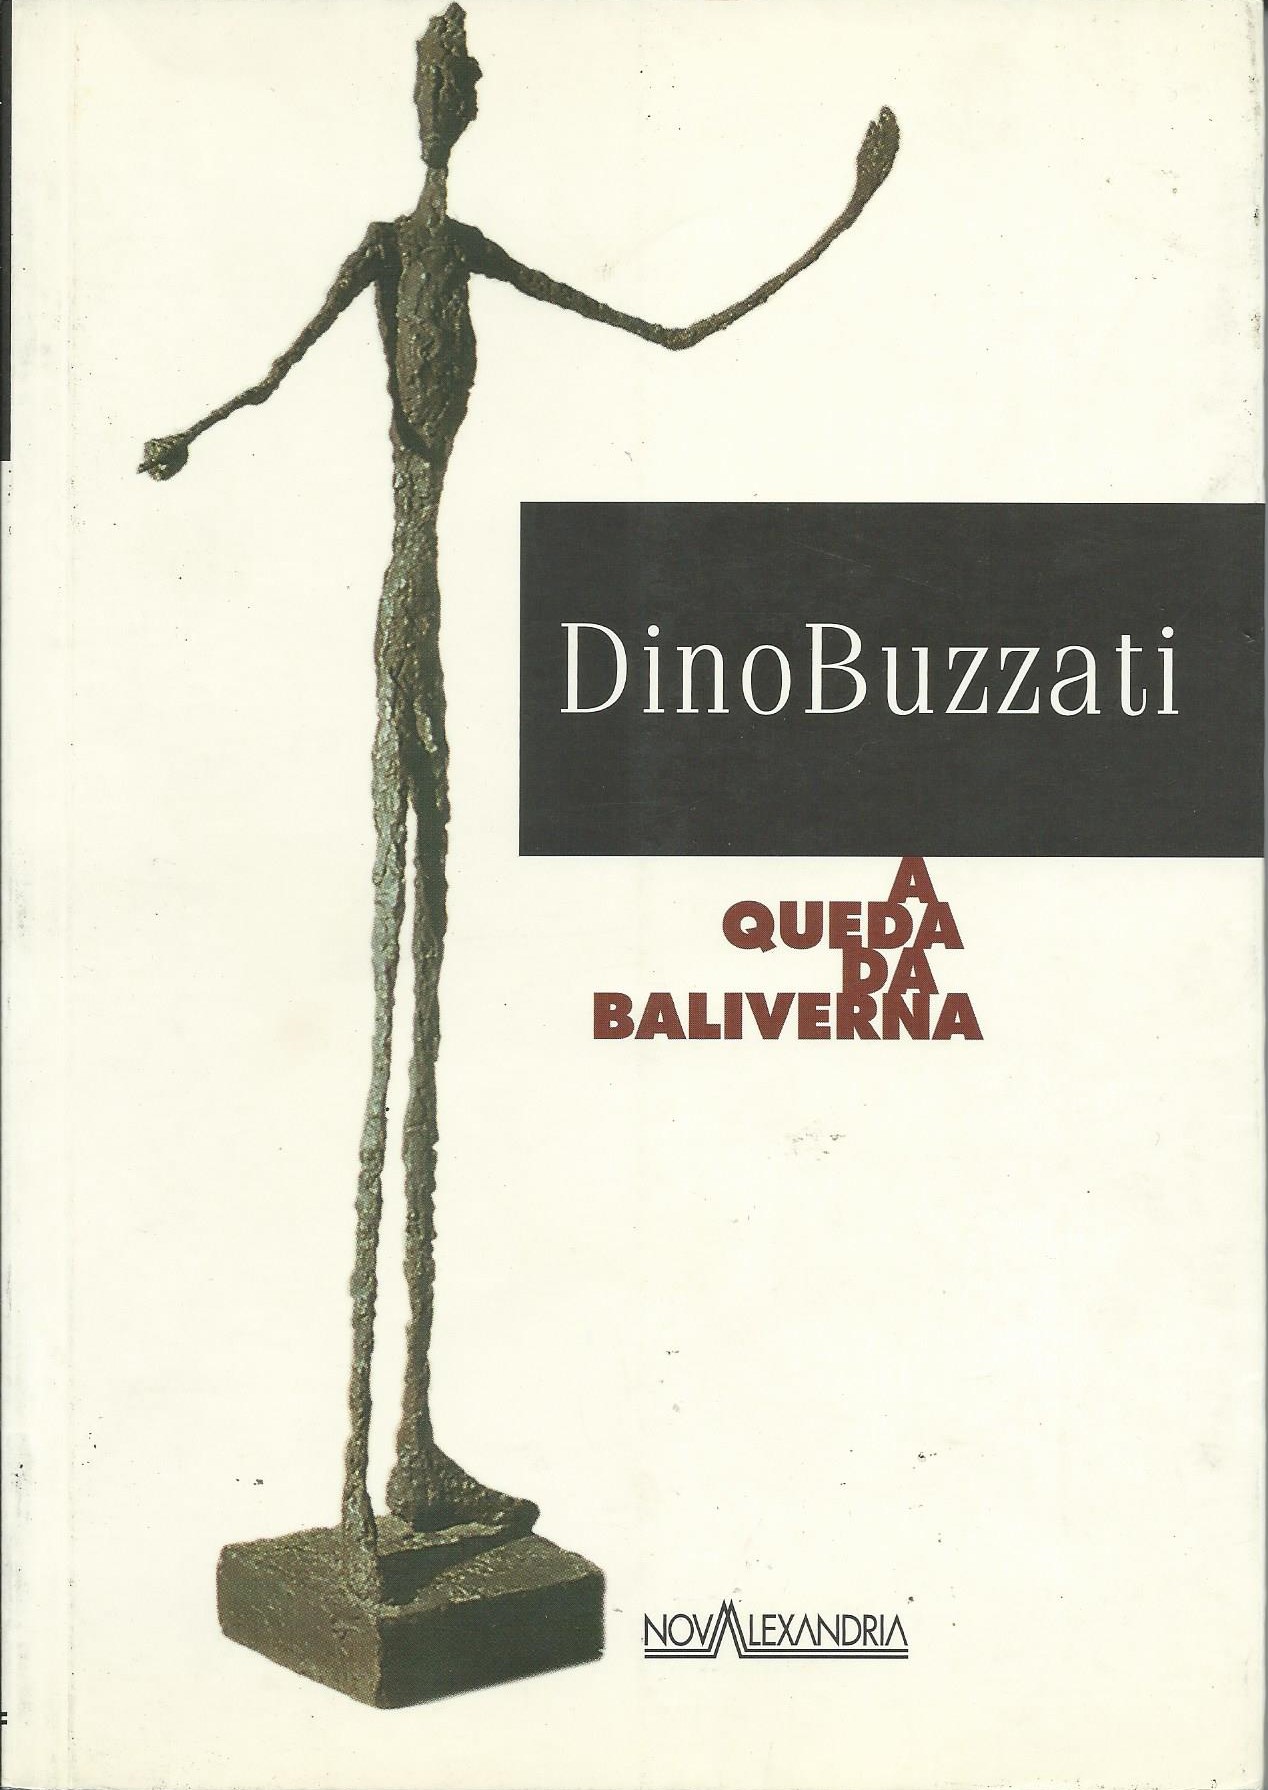 https://www.literaturabrasileira.ufsc.br/_images/obras/a_queda_da_baliverna_1997.jpg